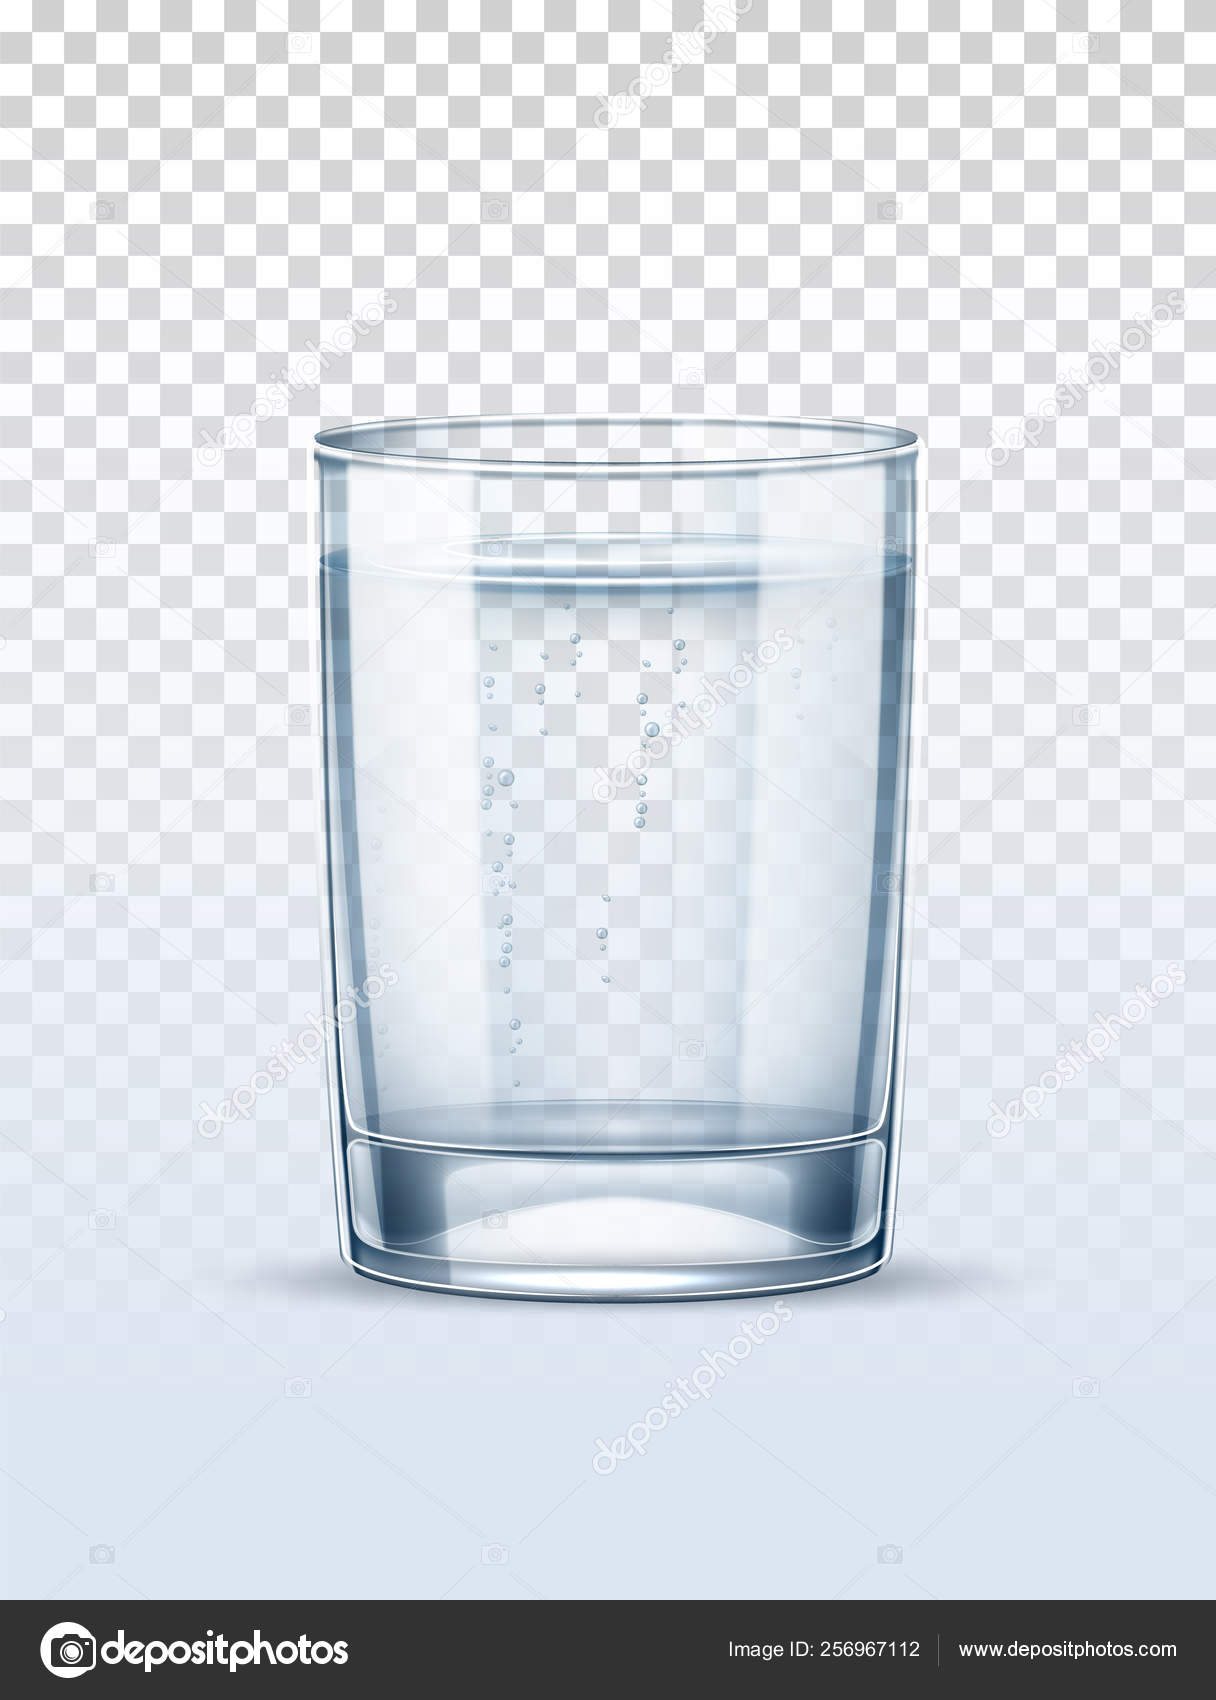 https://st4.depositphotos.com/6114530/25696/v/1600/depositphotos_256967112-stock-illustration-vector-realistic-empty-glass-for.jpg